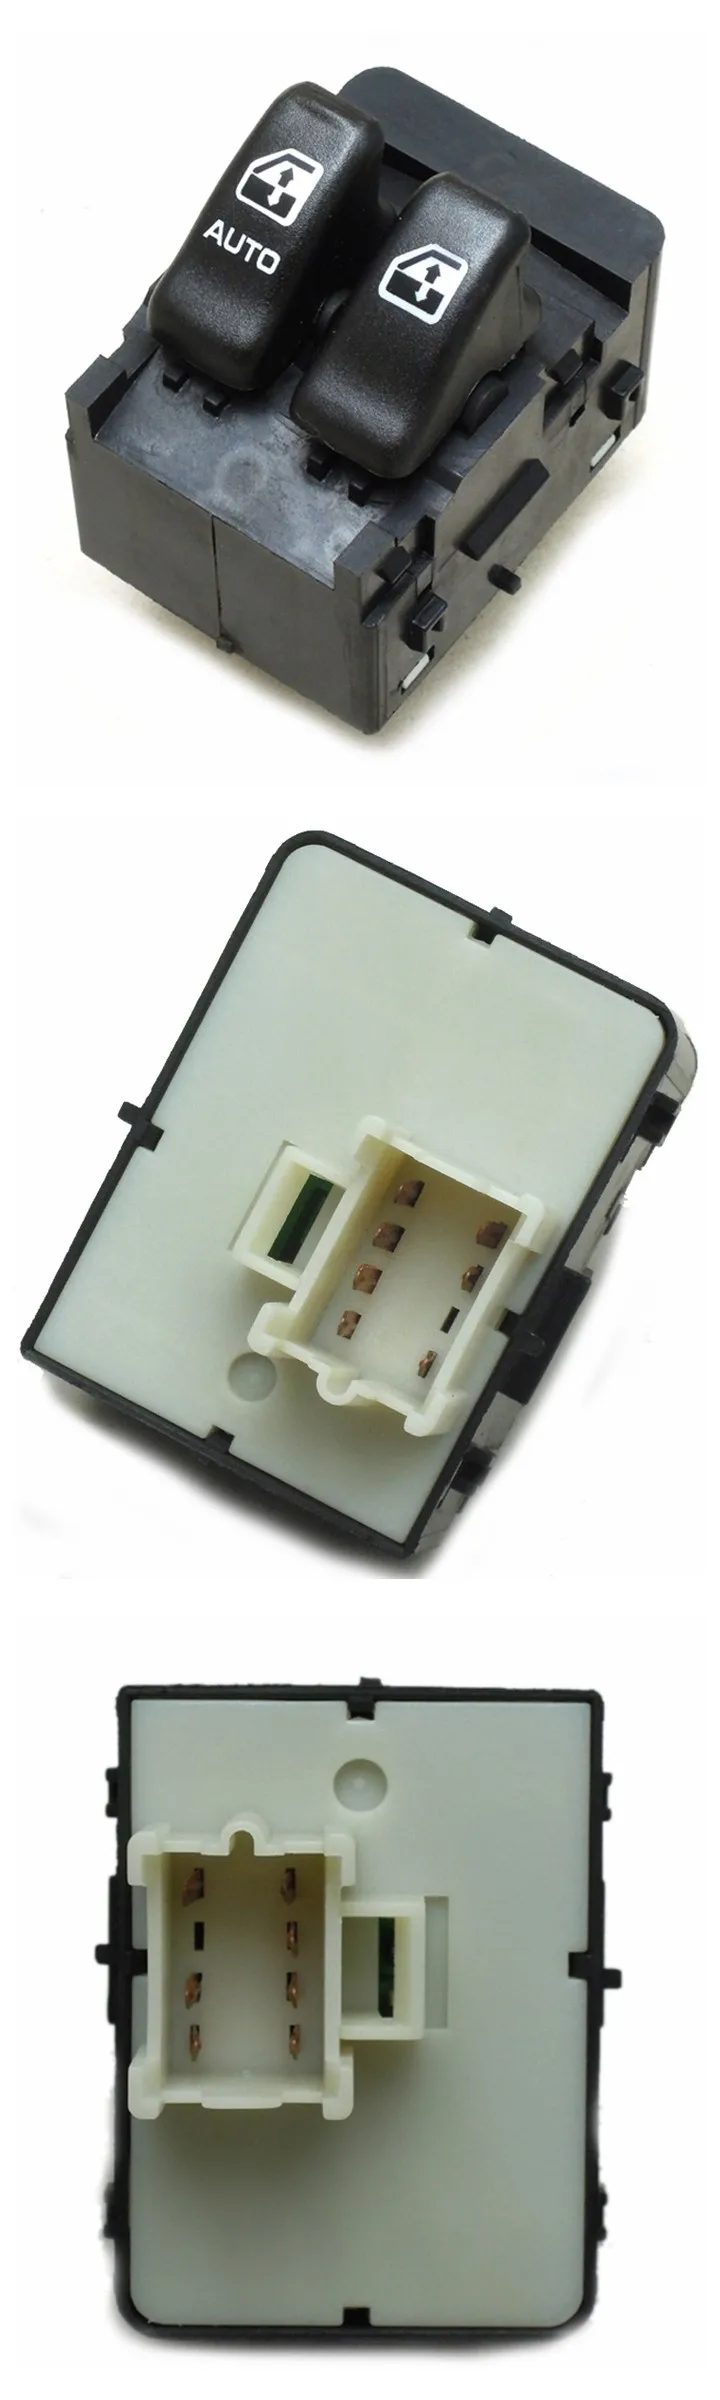 Electric window switch For Chevrolet Venture 10387305 IWSGM012 (5).jpg